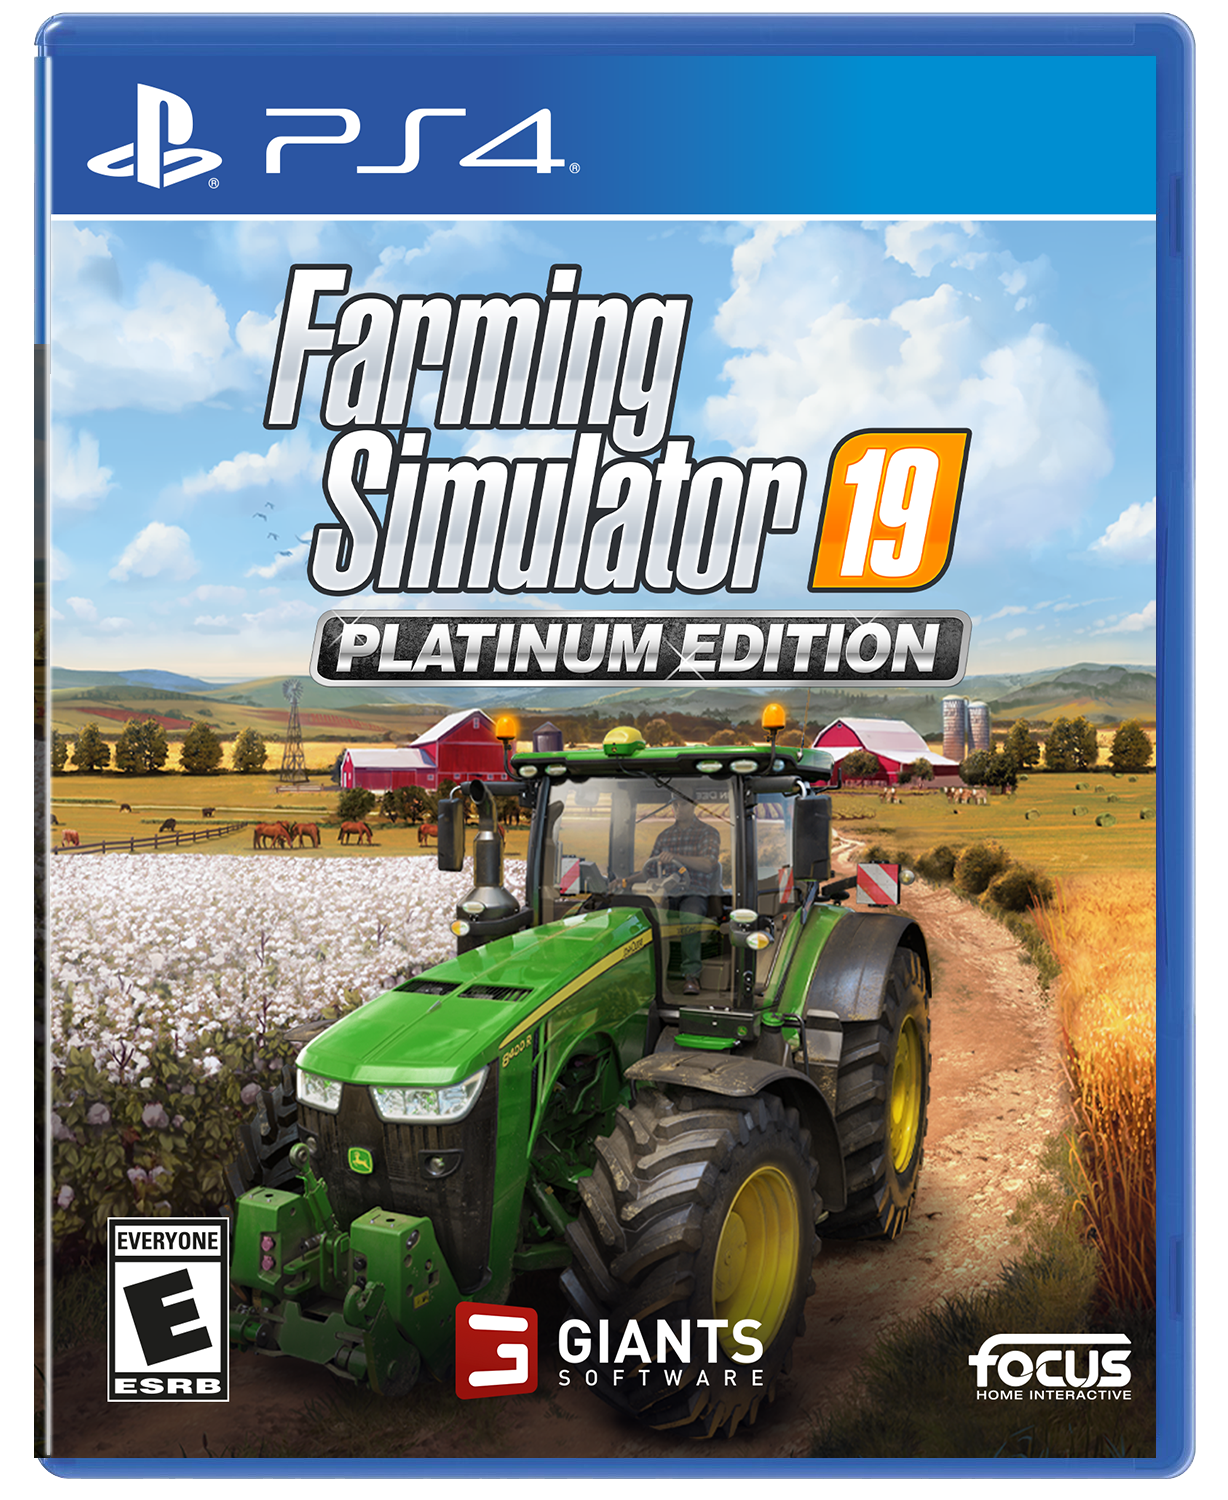 Farming simulator premium edition ps4 download